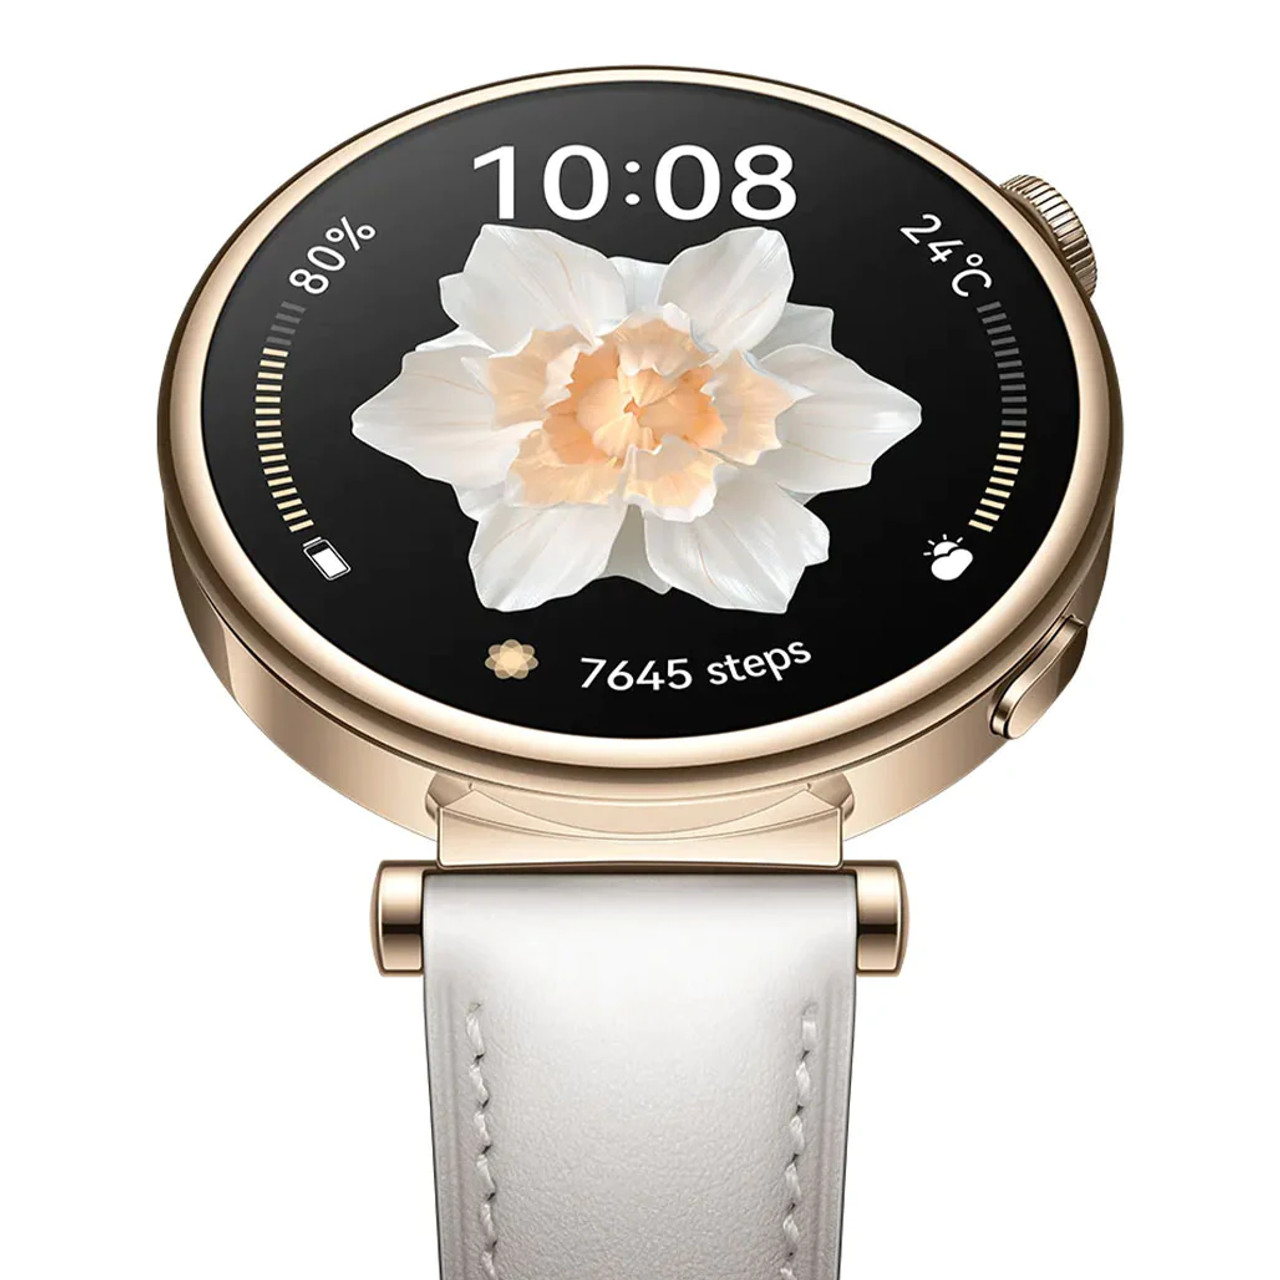 Watch Smart , White|ARA-B19-WT| Ara-B19 GT4 Watch | Huawei 41mm COMPUTERS AYOUB LEBANON Leather